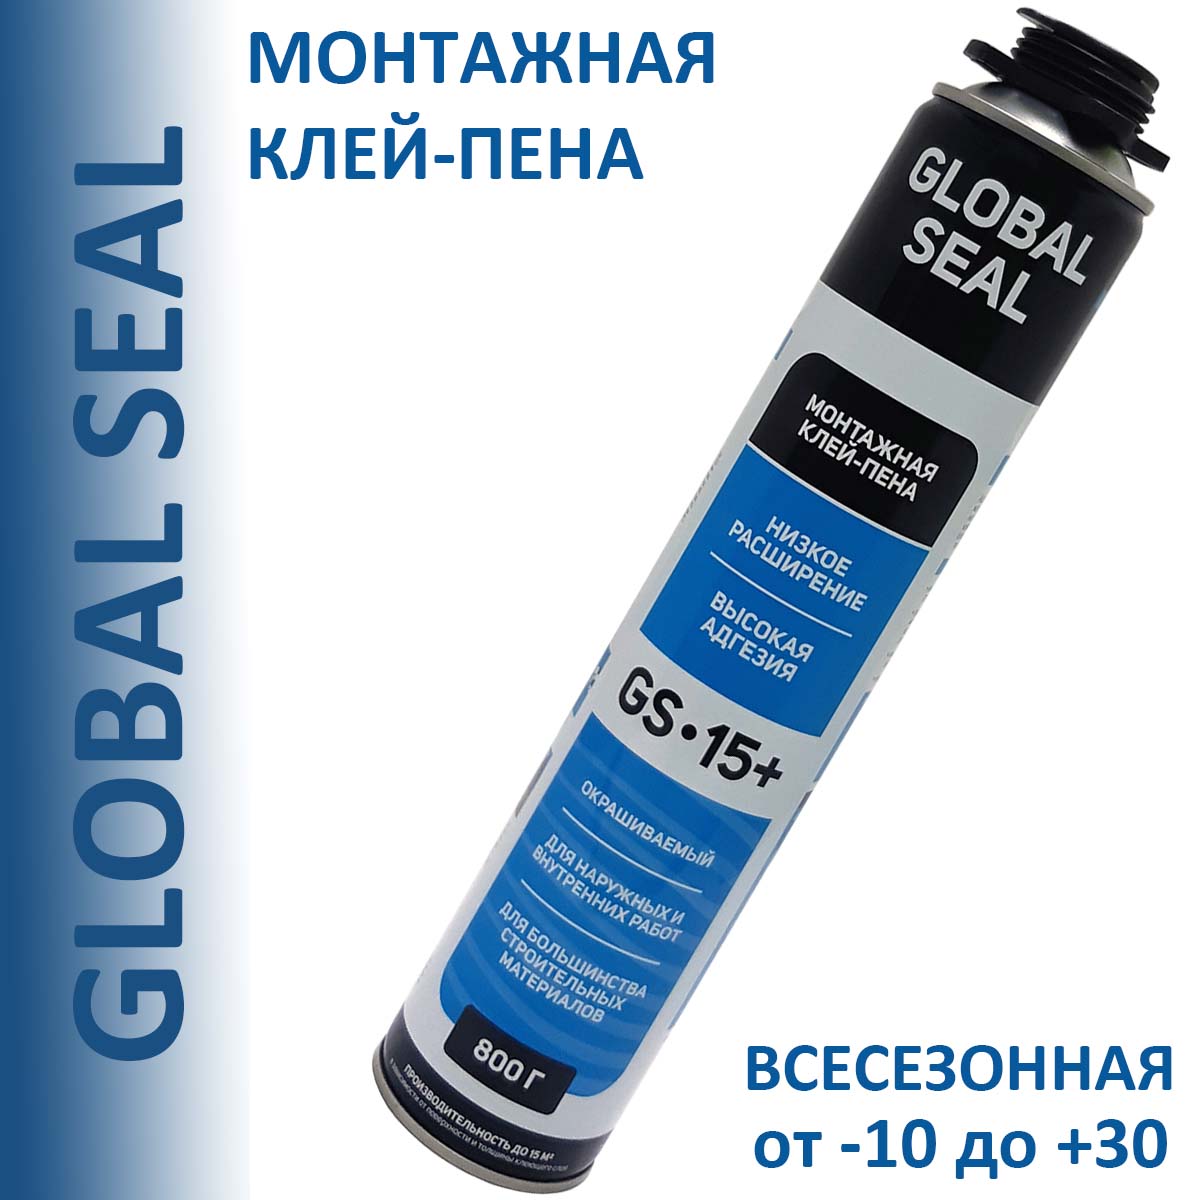 Клей-пена Монтажная Global Seal GS-15, всесезонная, 800 гр. всесезонная клей пена penosil